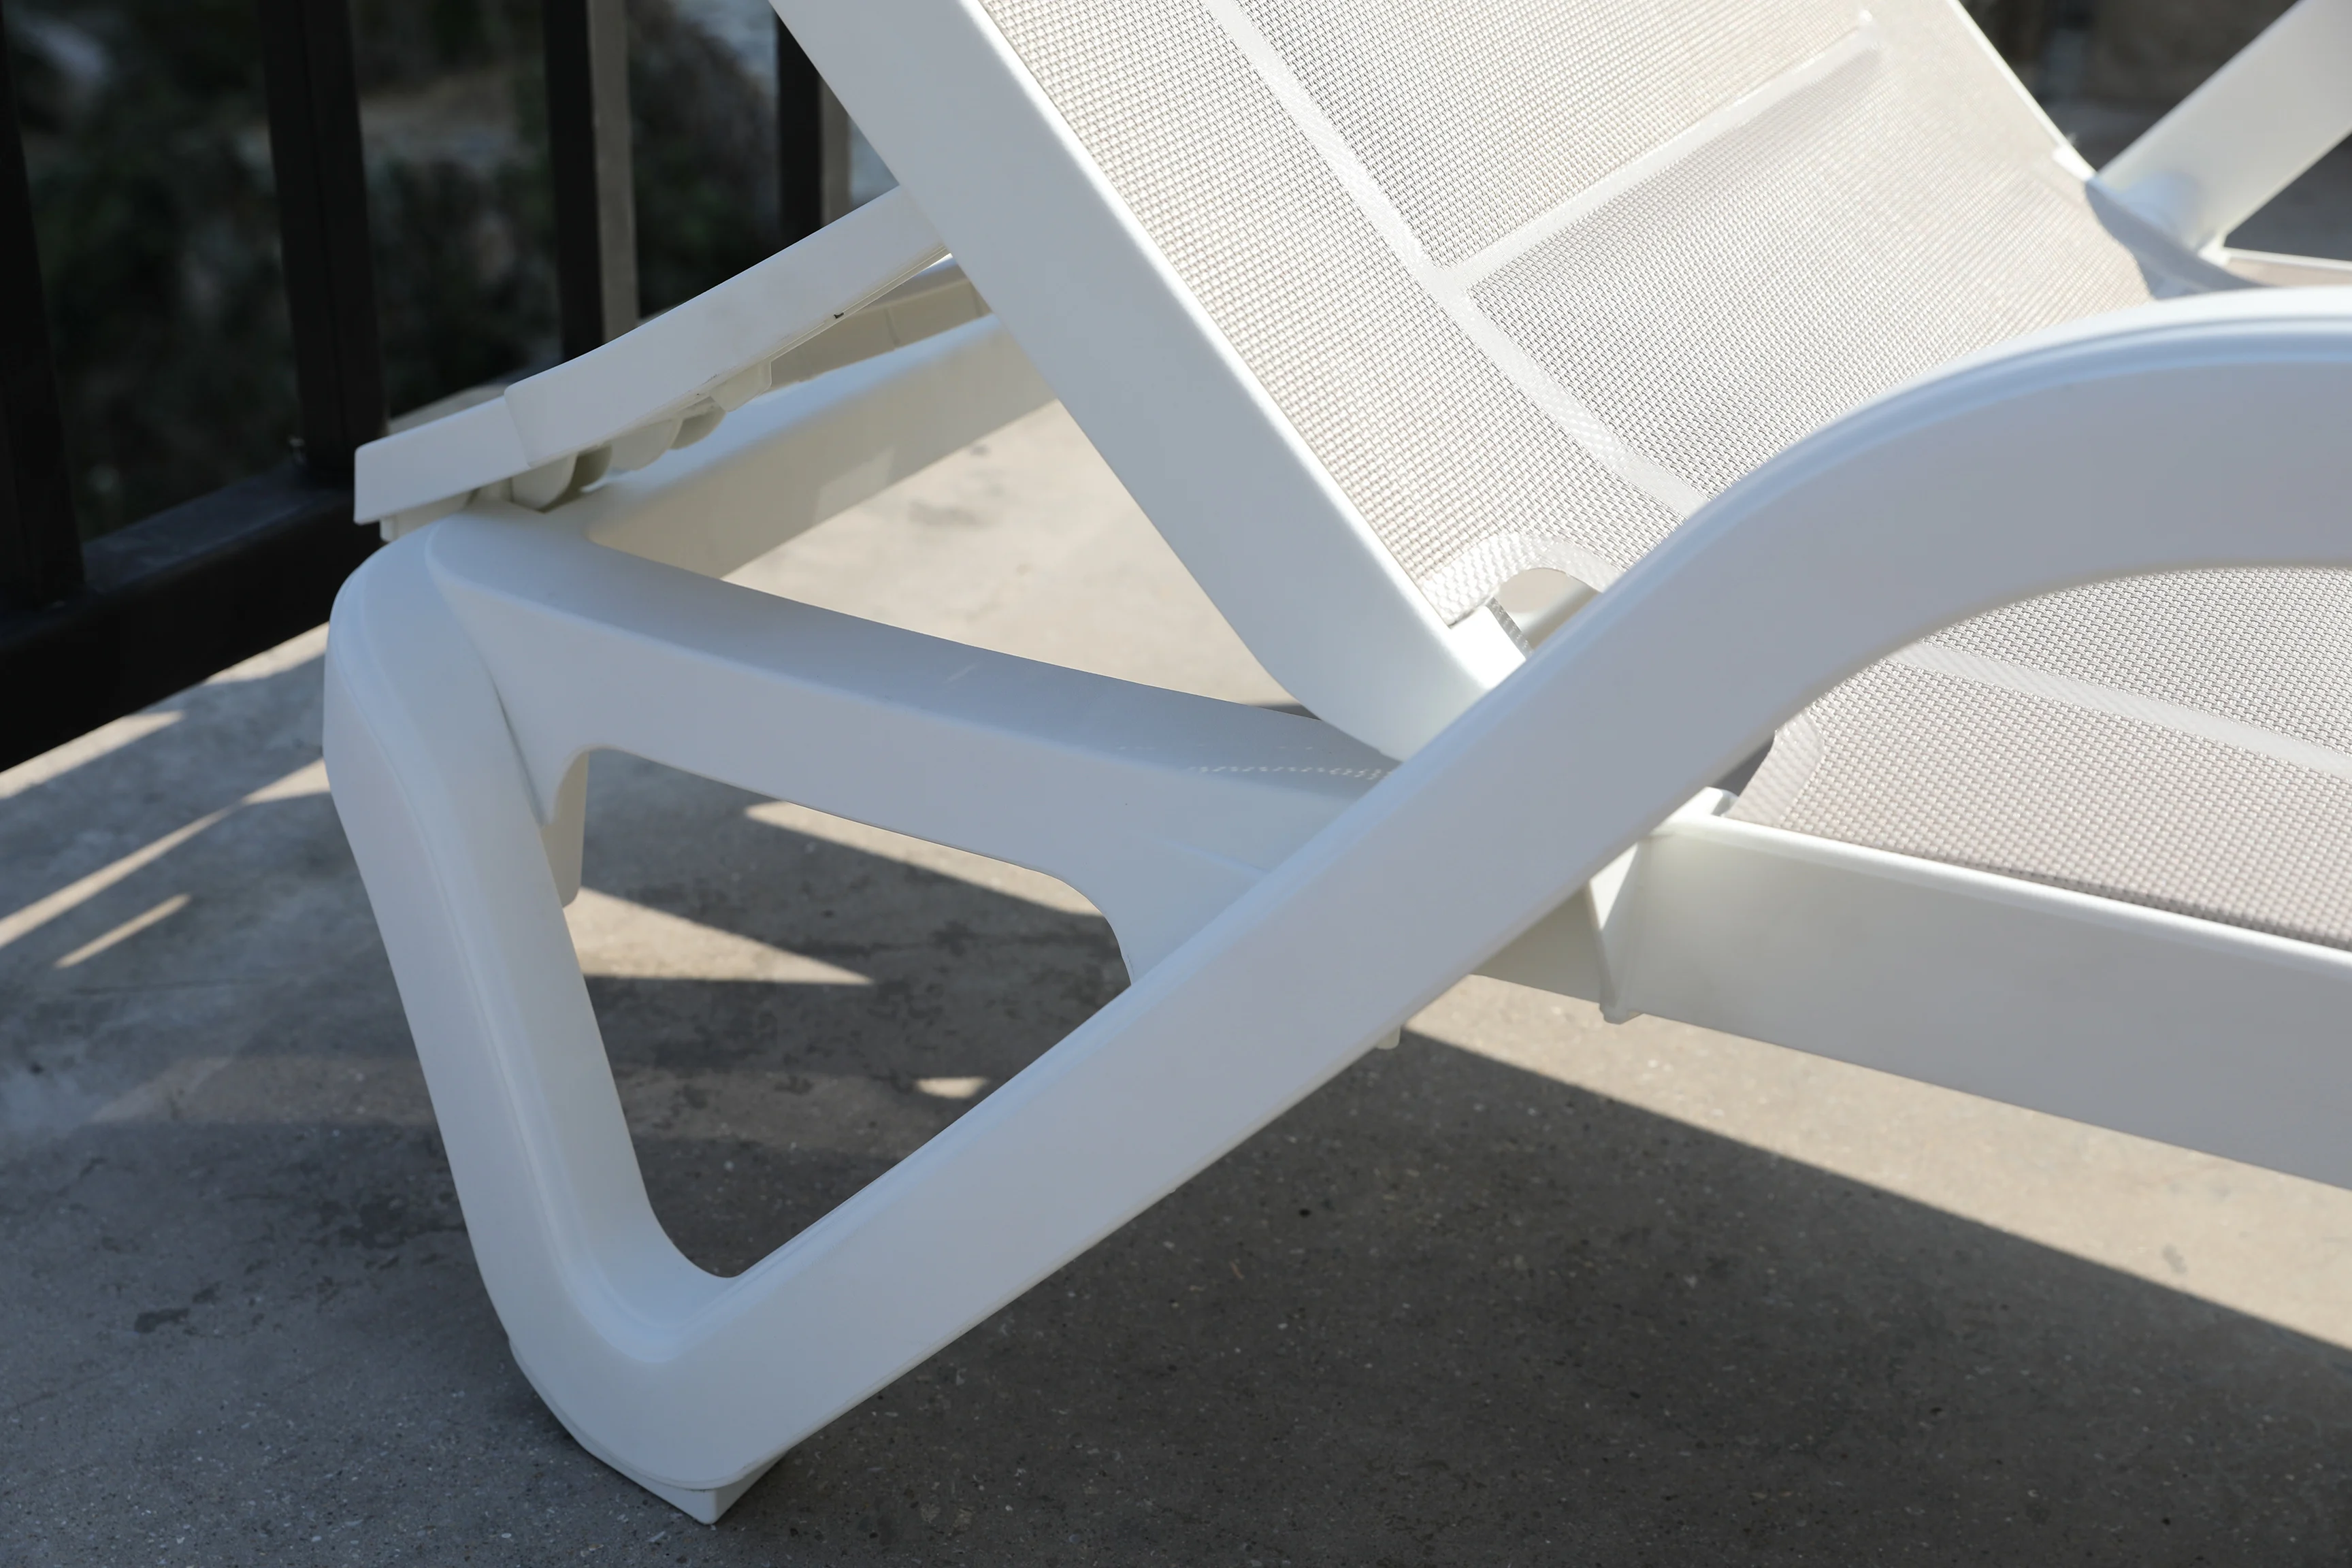 Modern  garden lounger plastic swimming pool chair beach sun lounger sofa chaise longue